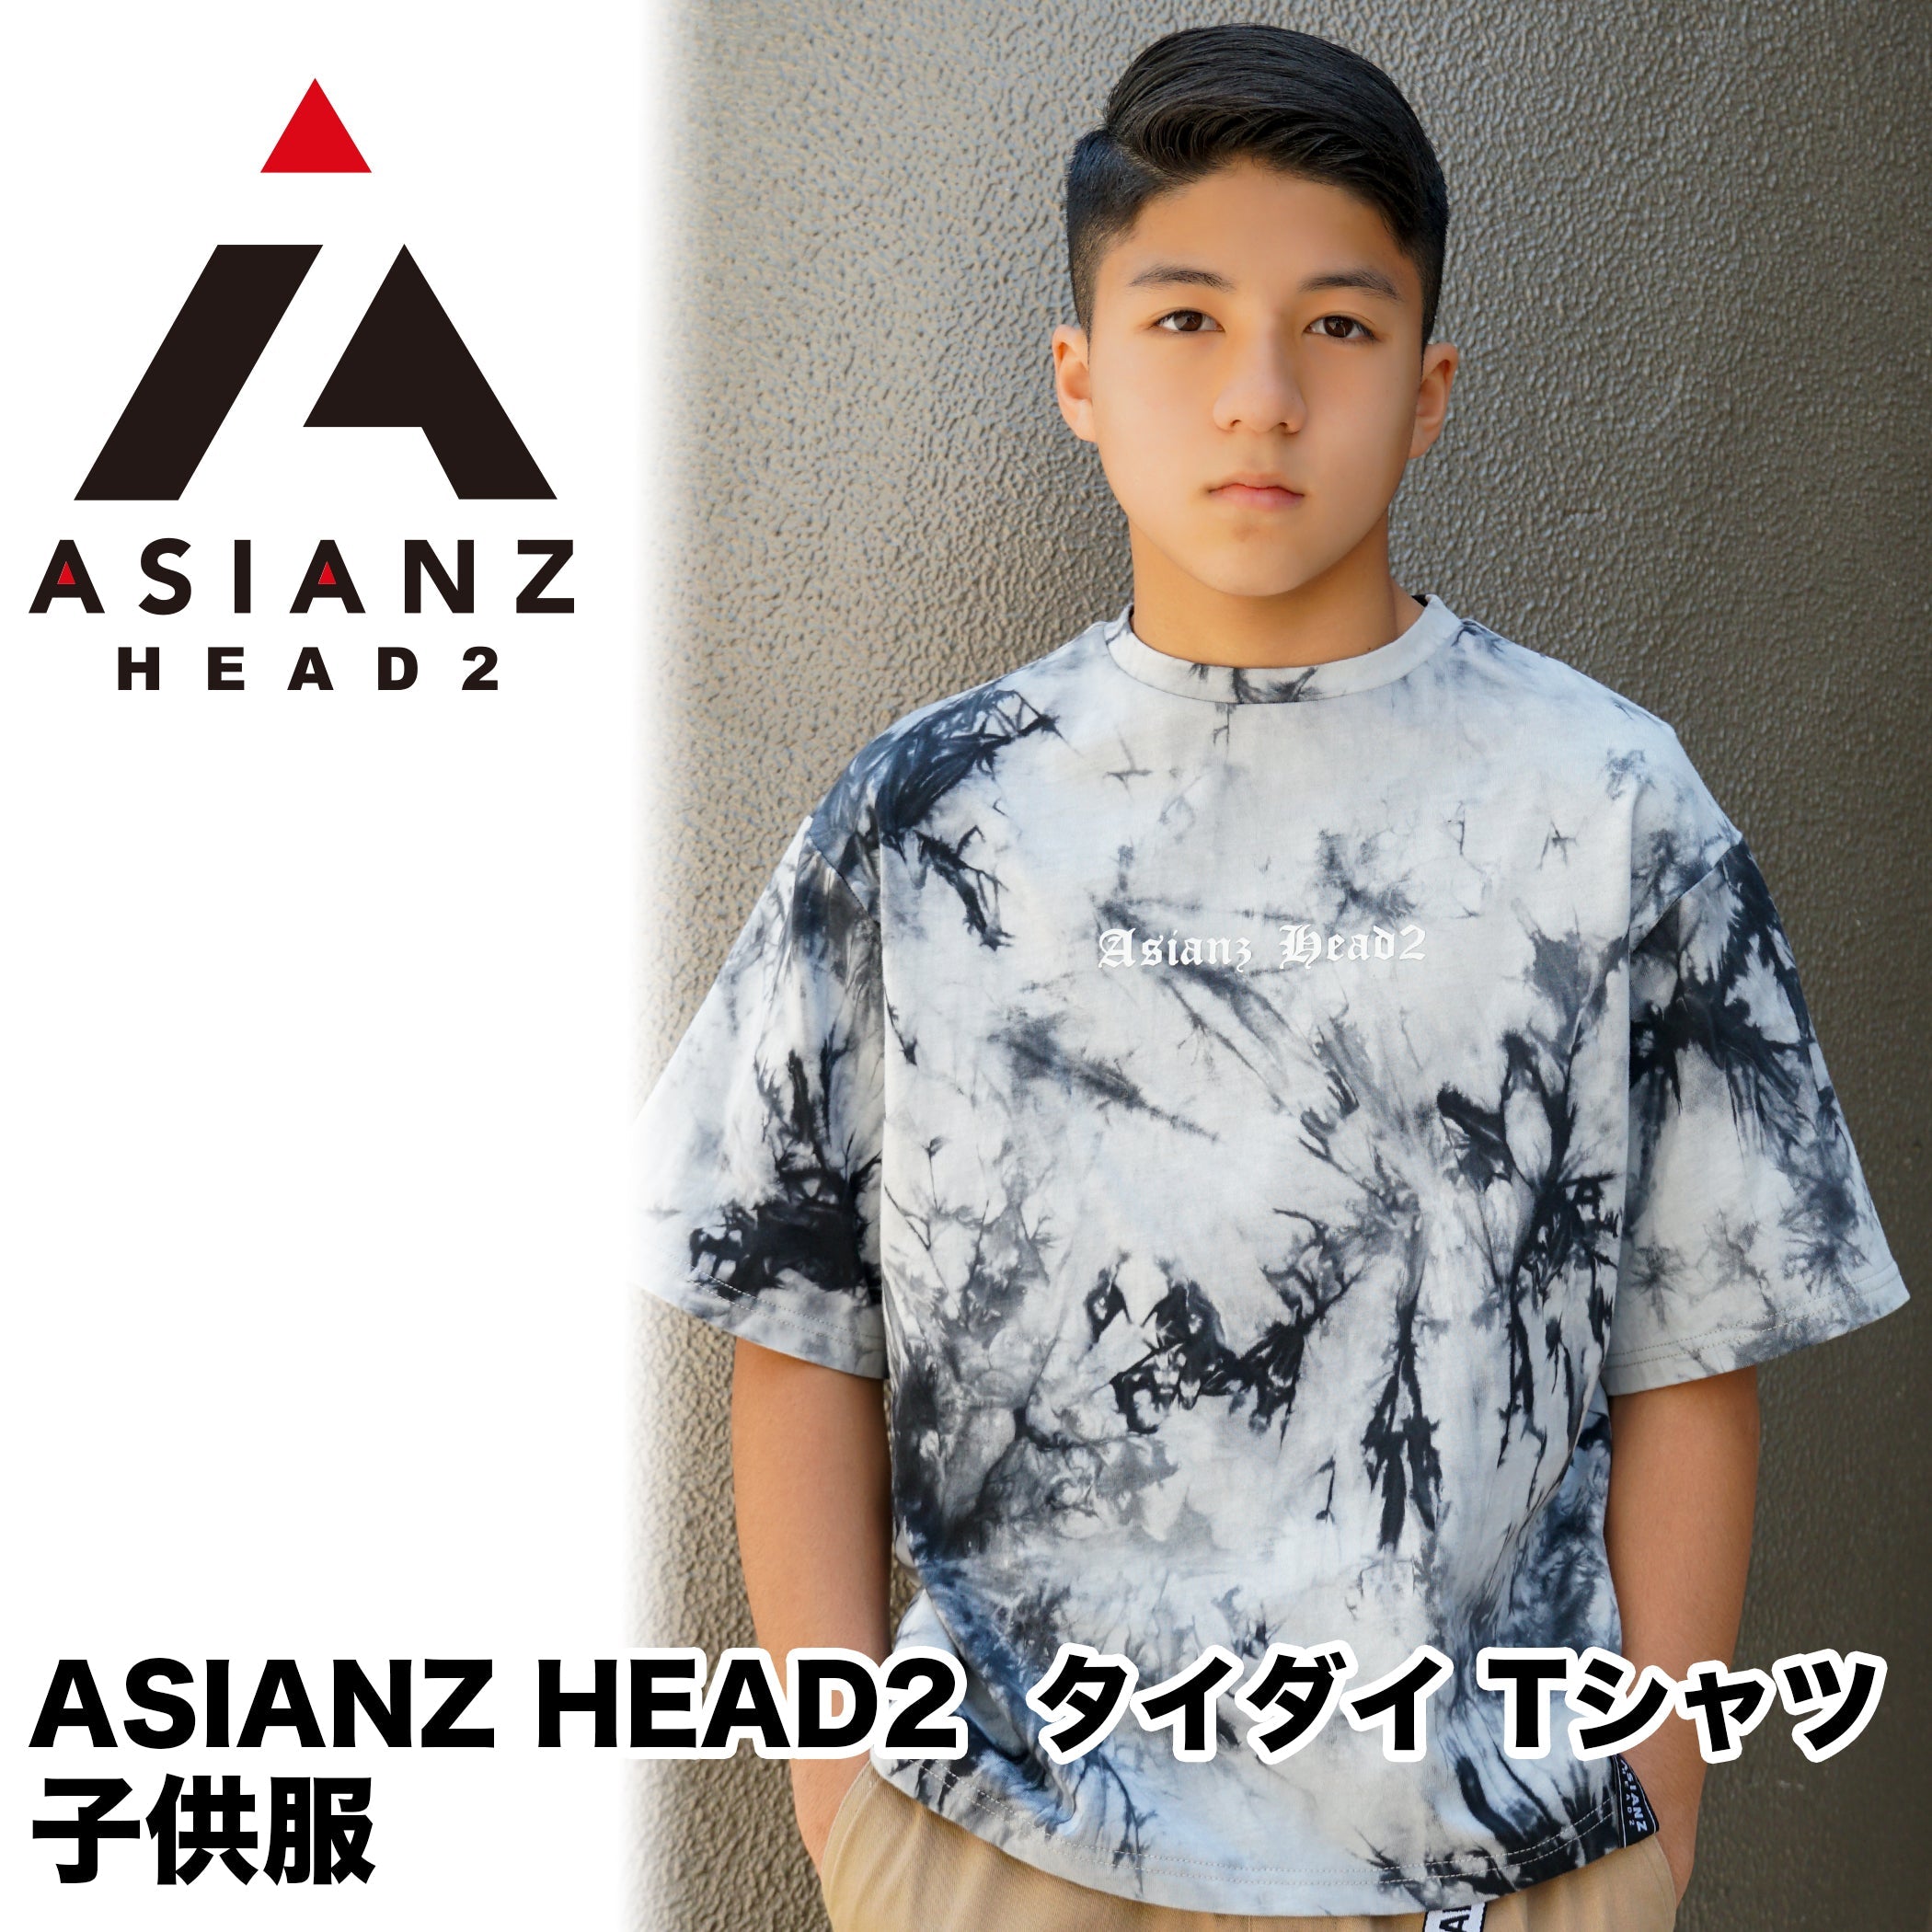 ASIANZ HEAD2 タイダイ Tシャツ キッズウェアー